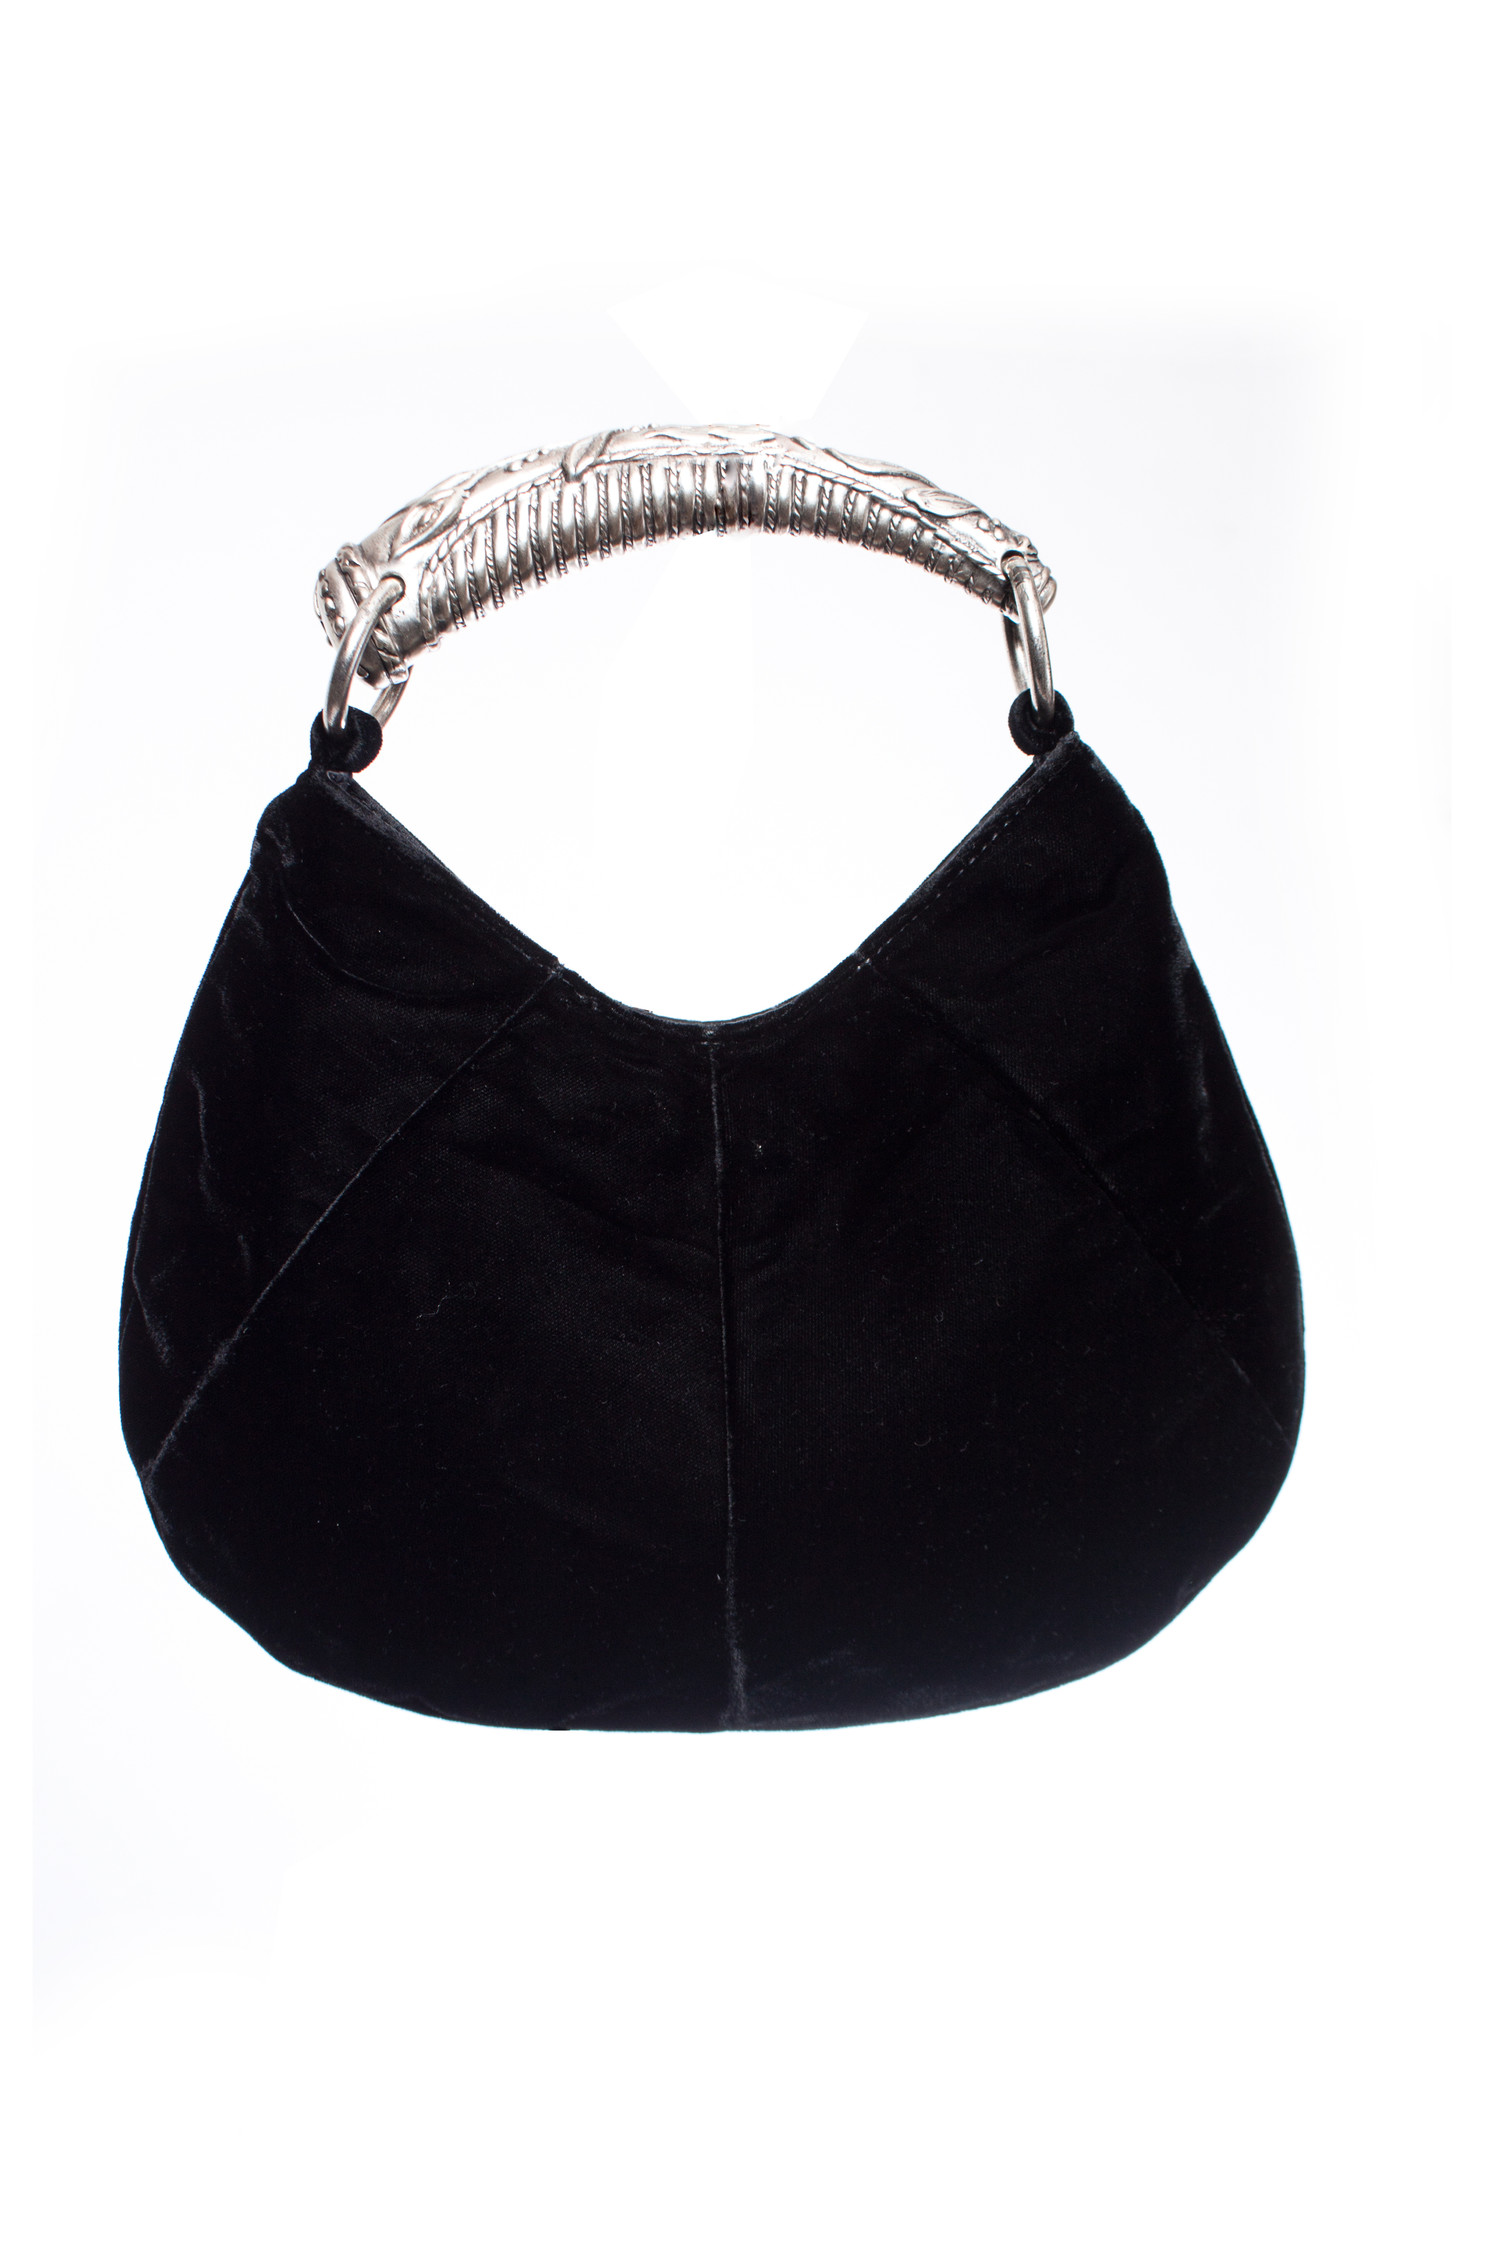 Bag: ysl hand gold black side s | Purses and handbags, Bags, Leather  shoulder handbags